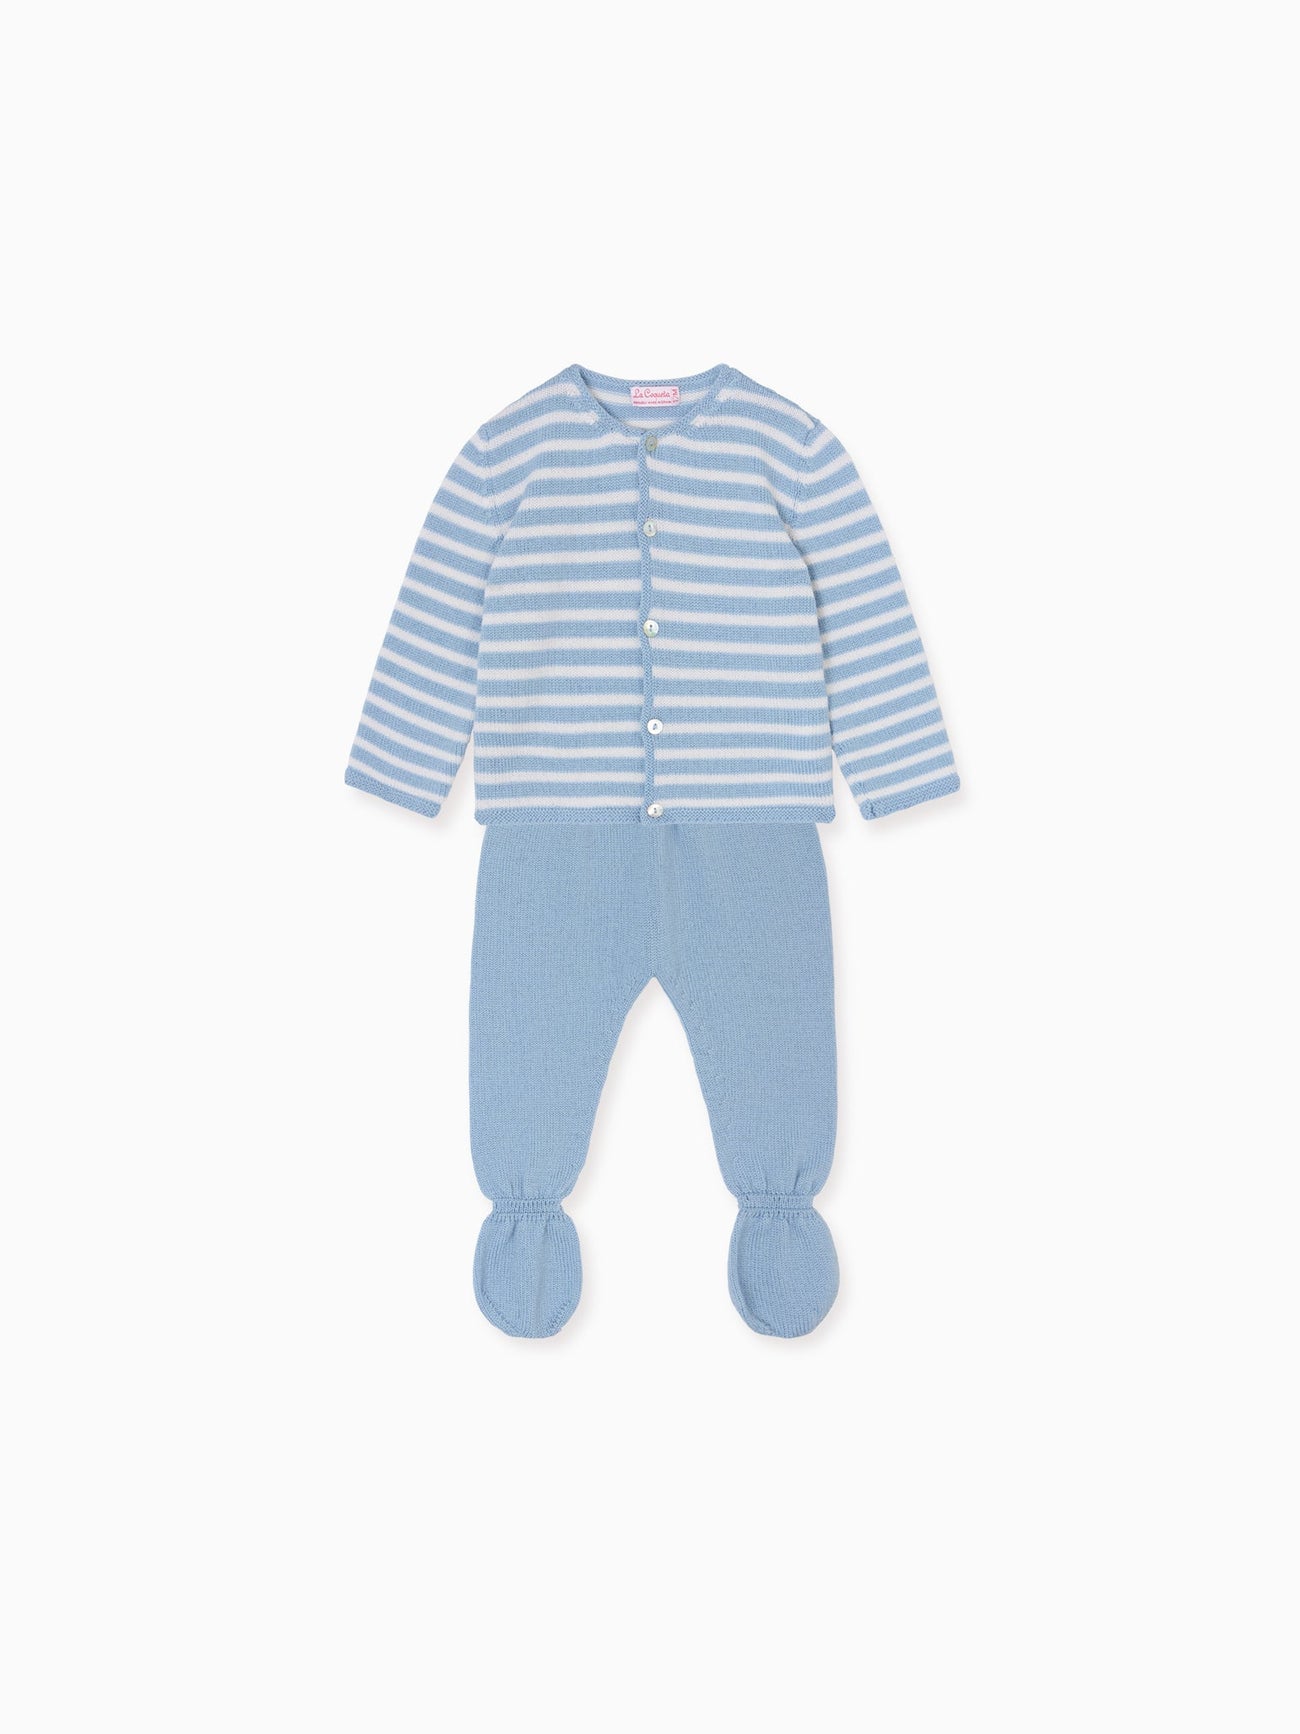 Dusty Blue Stripe Pinto Merino Baby Knitted Set